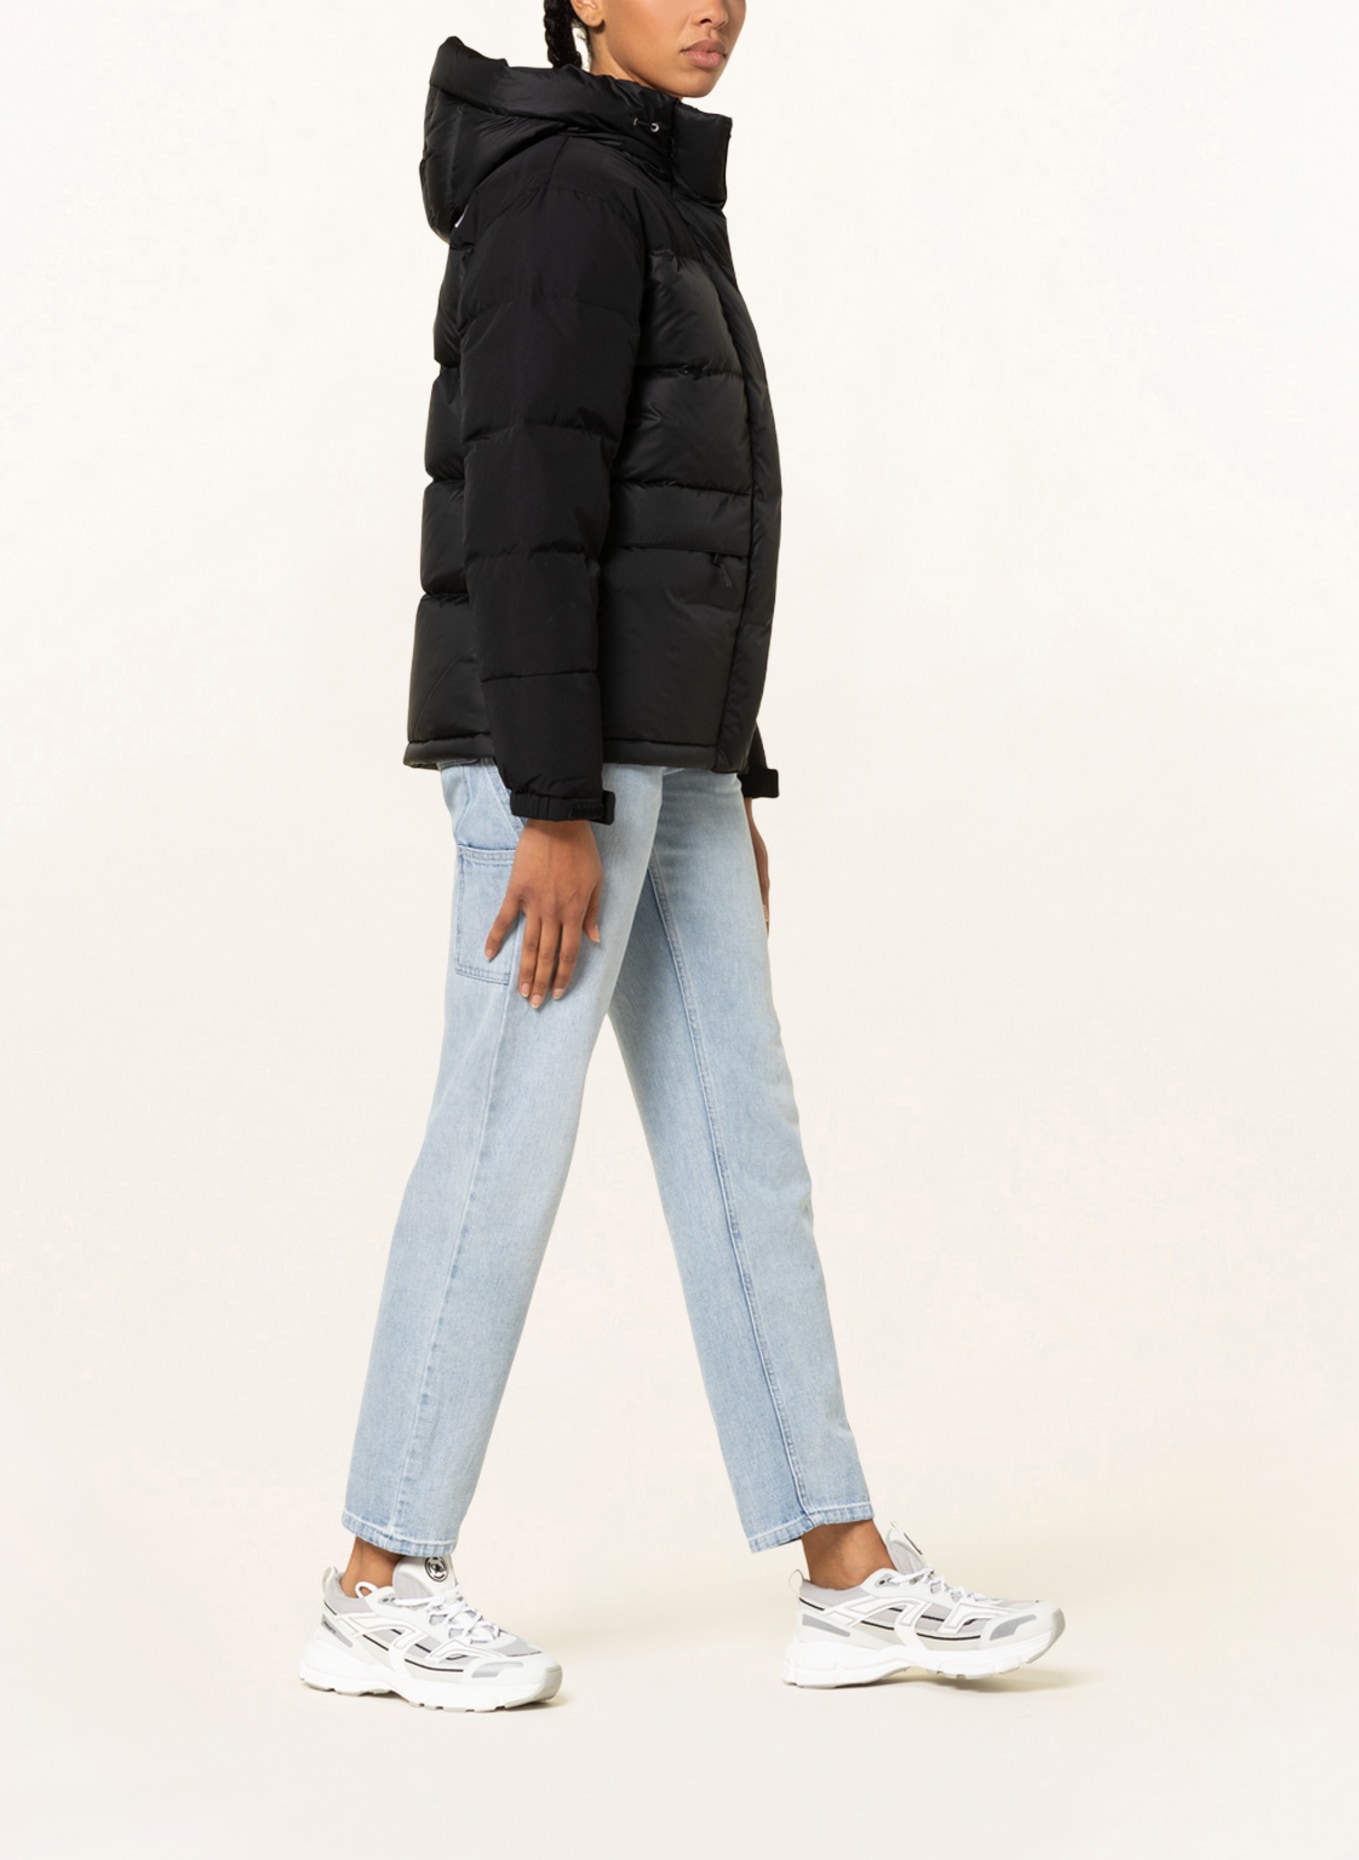 The North Face Women's Matte Black Puffer Jacket